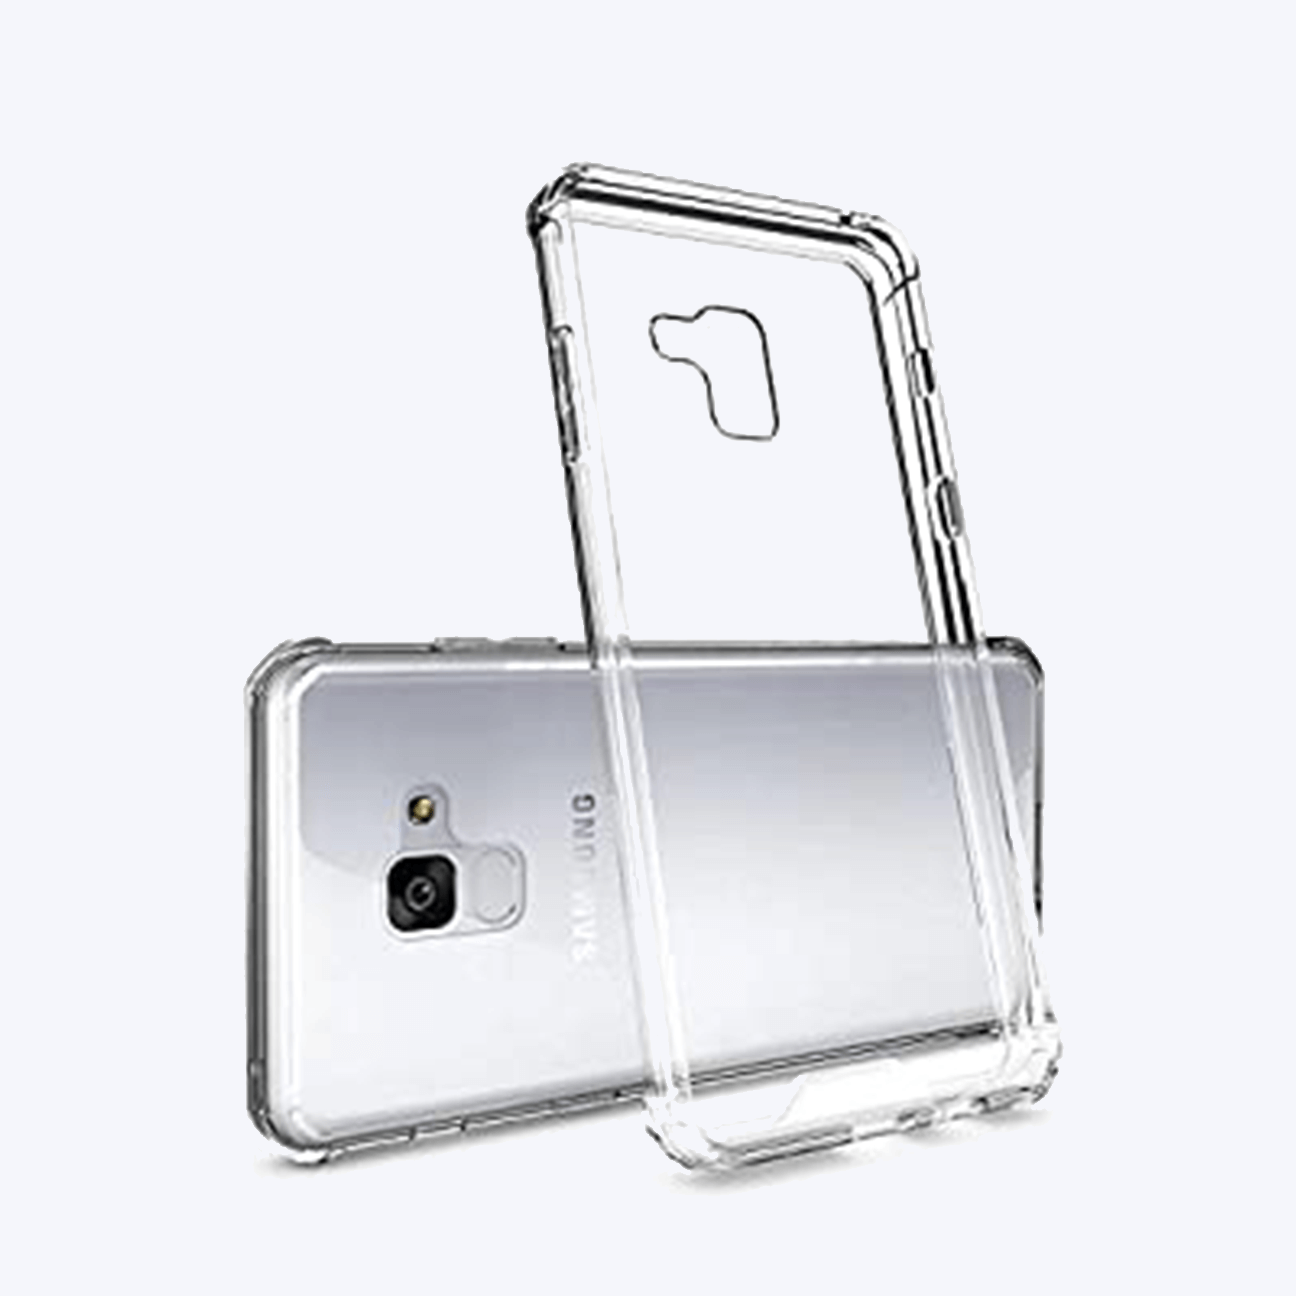 Samsung Galaxy A8 Plus Transparent Back Cover